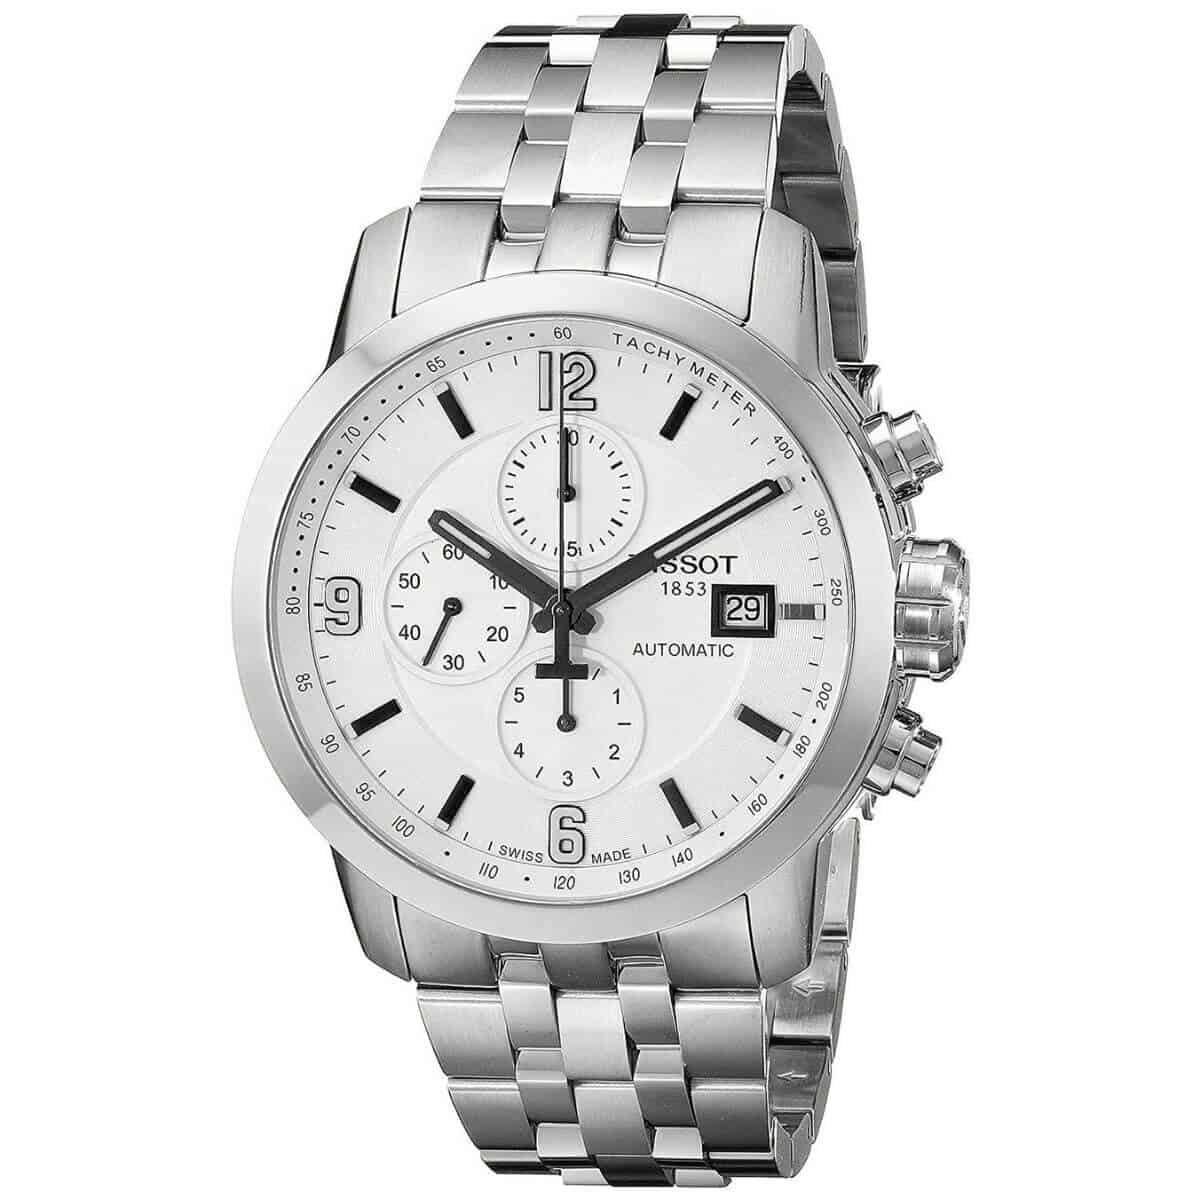 Silver chronograph watch.